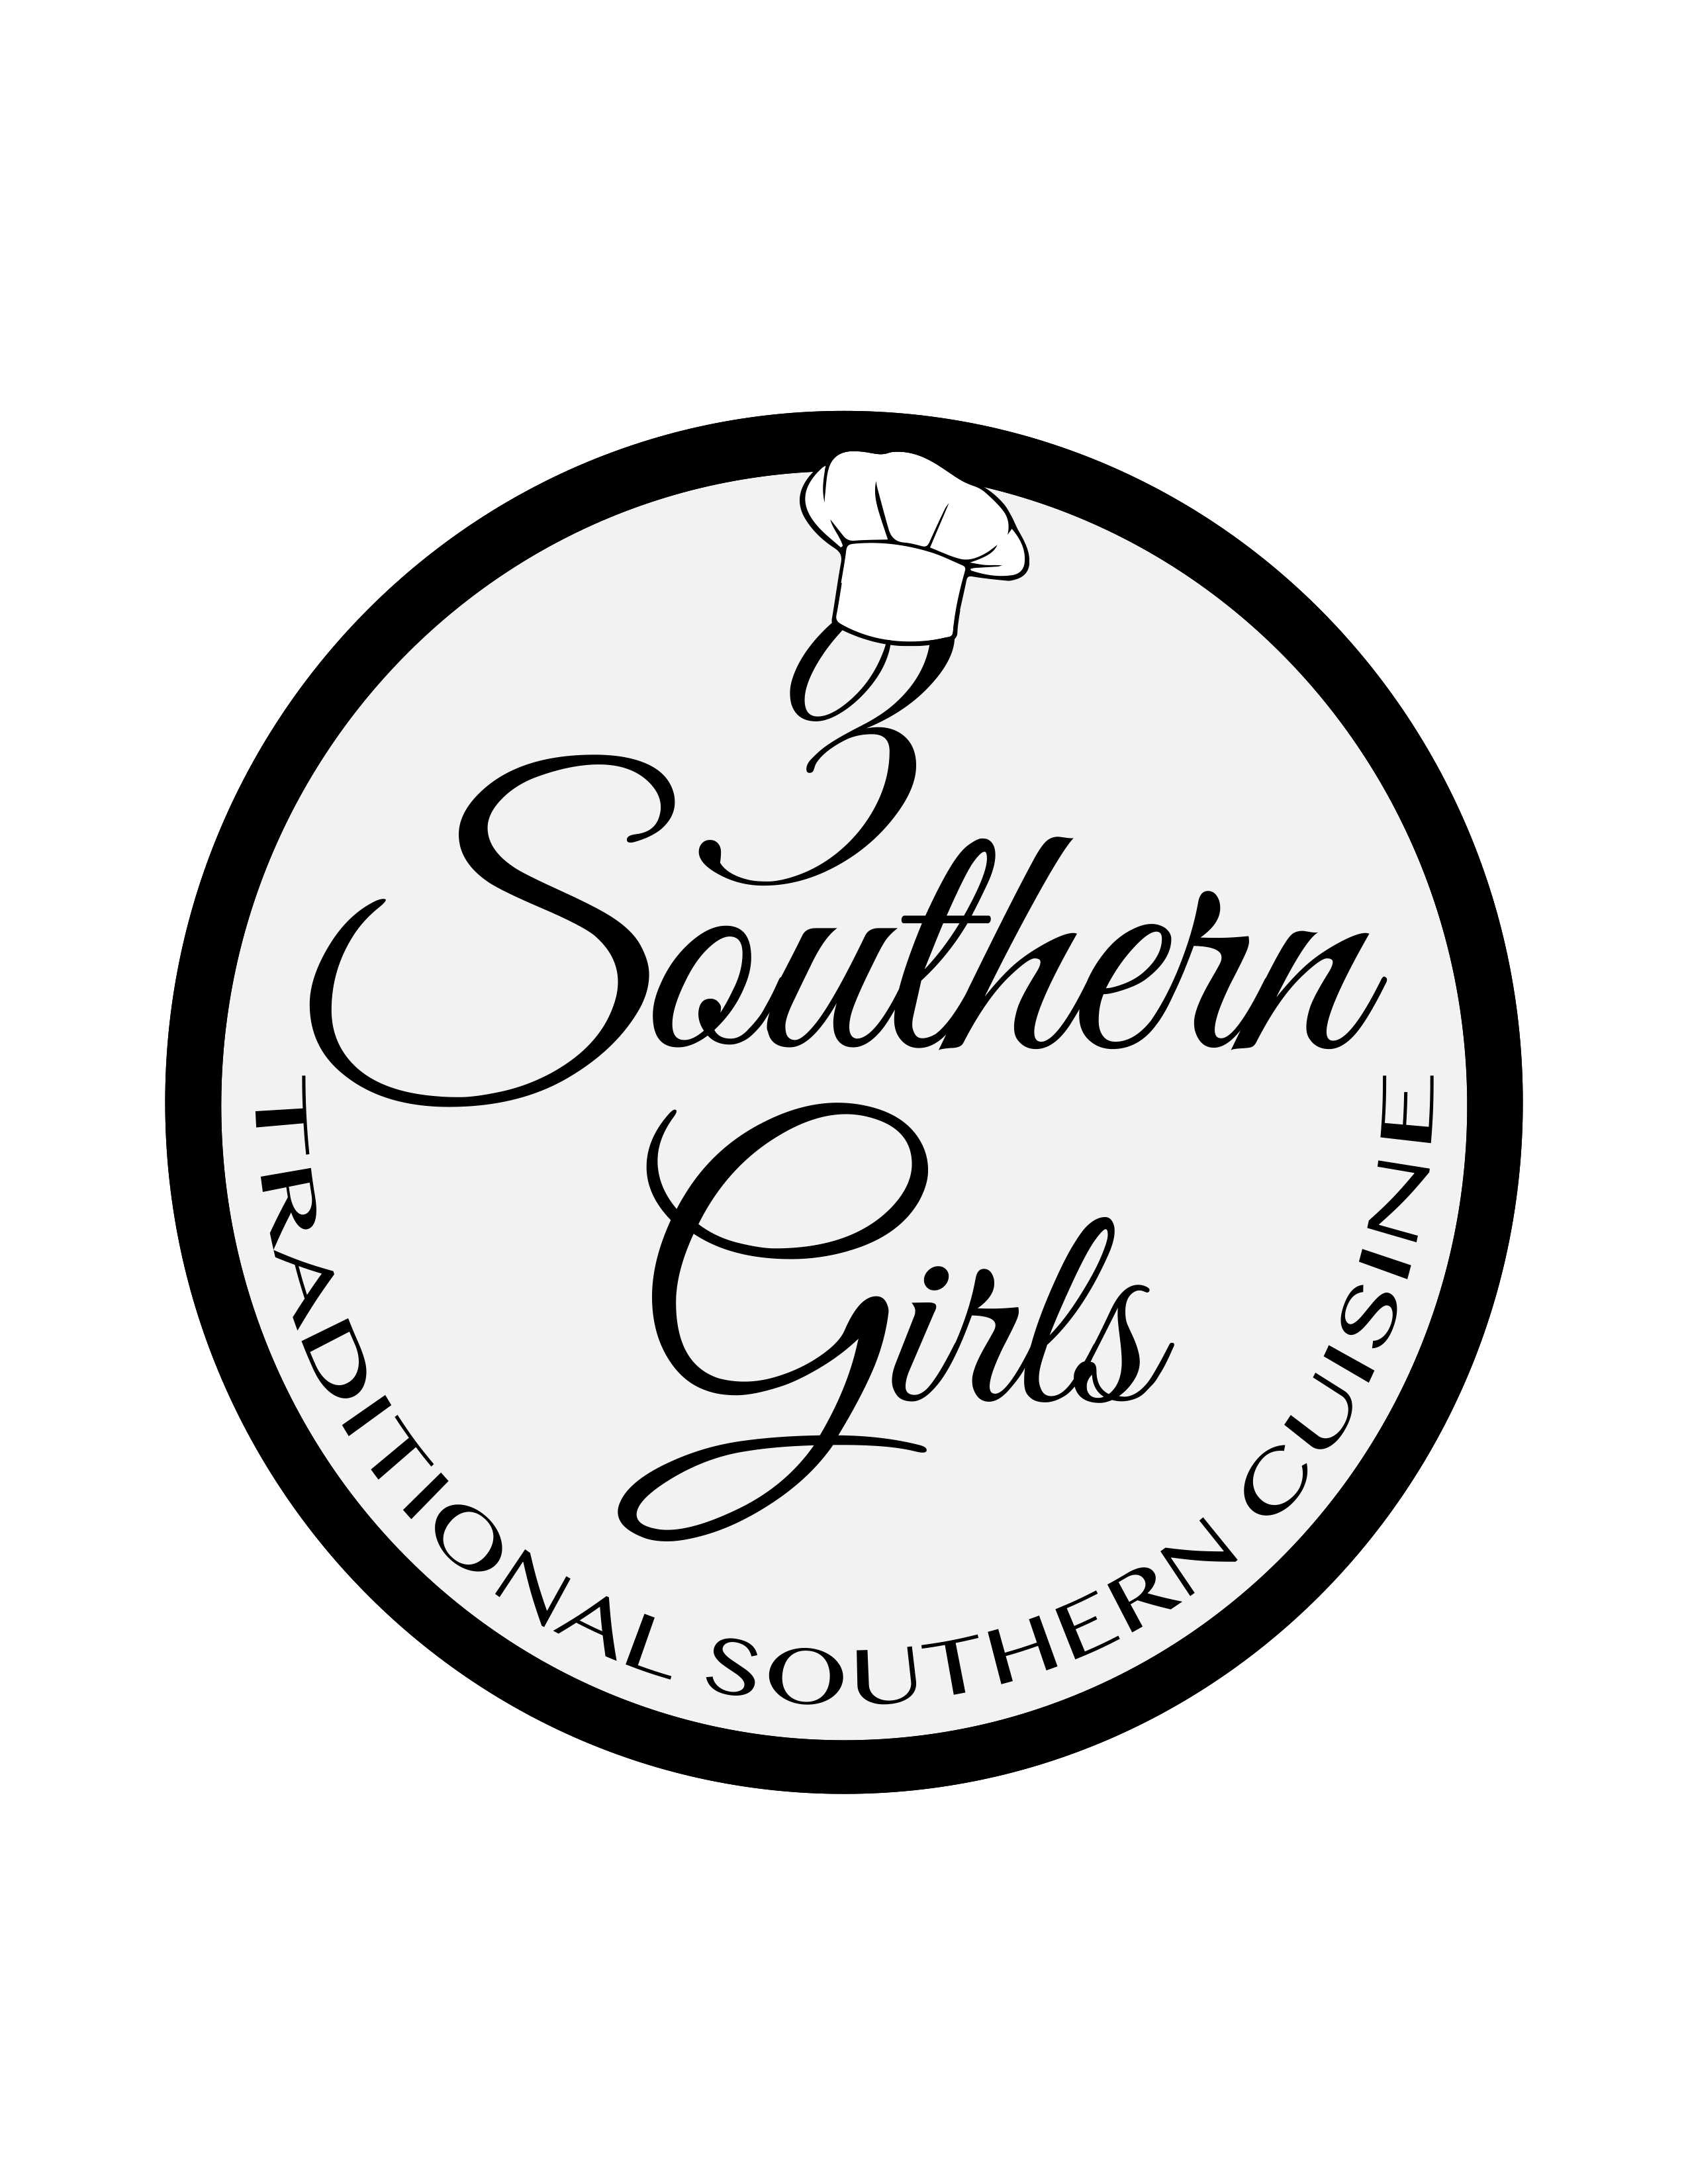 3 Southern Girls